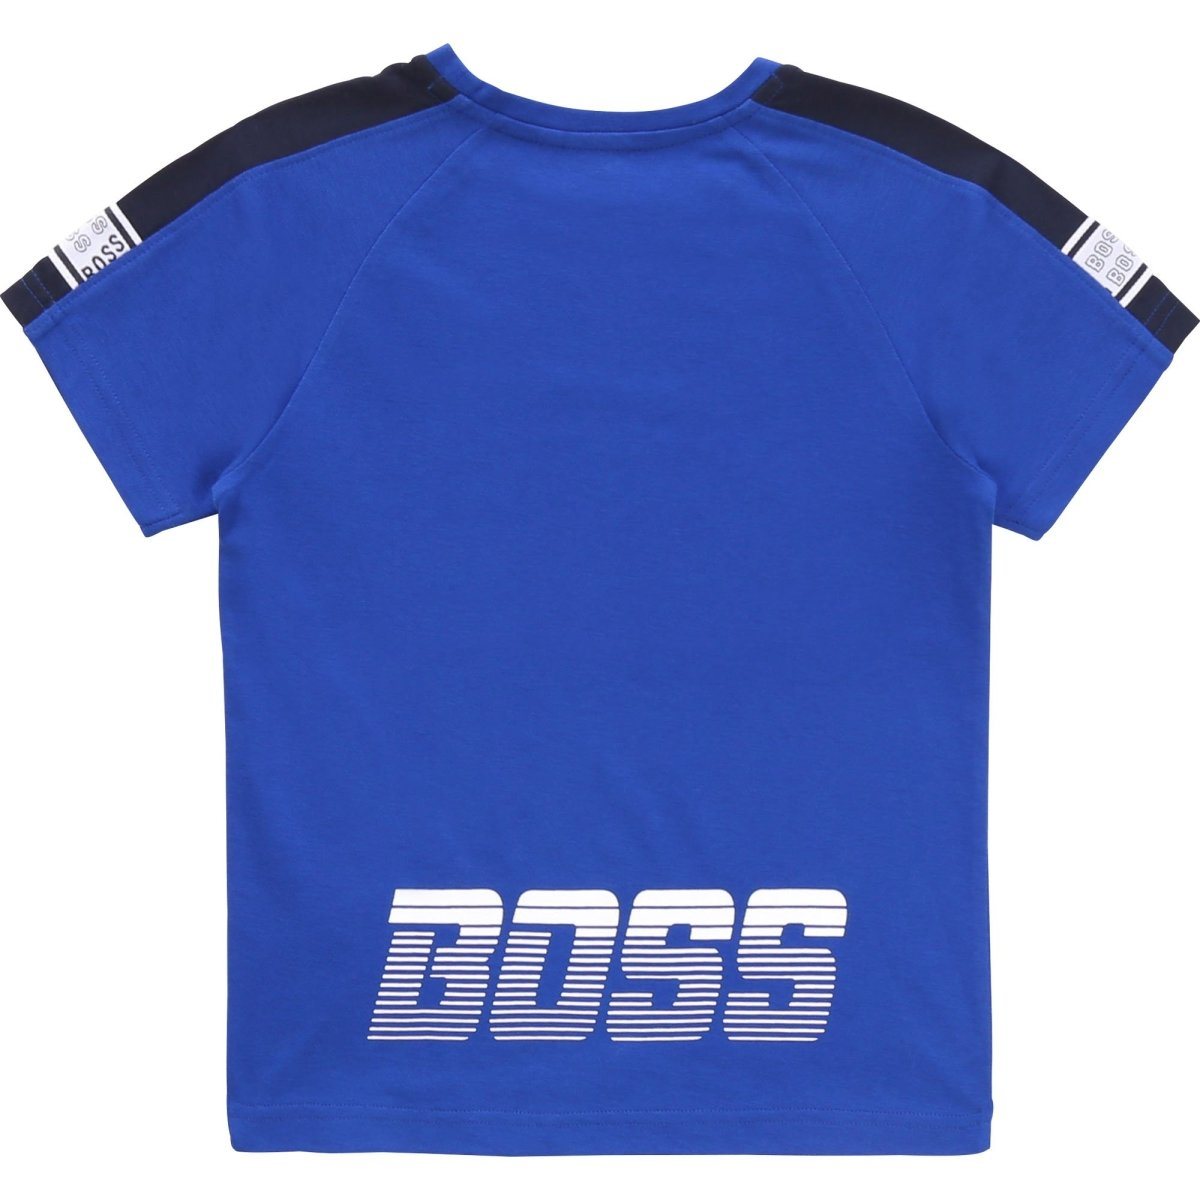 Hugo Boss Boys S/S T-Shirt T-Shirts Hugo Boss 